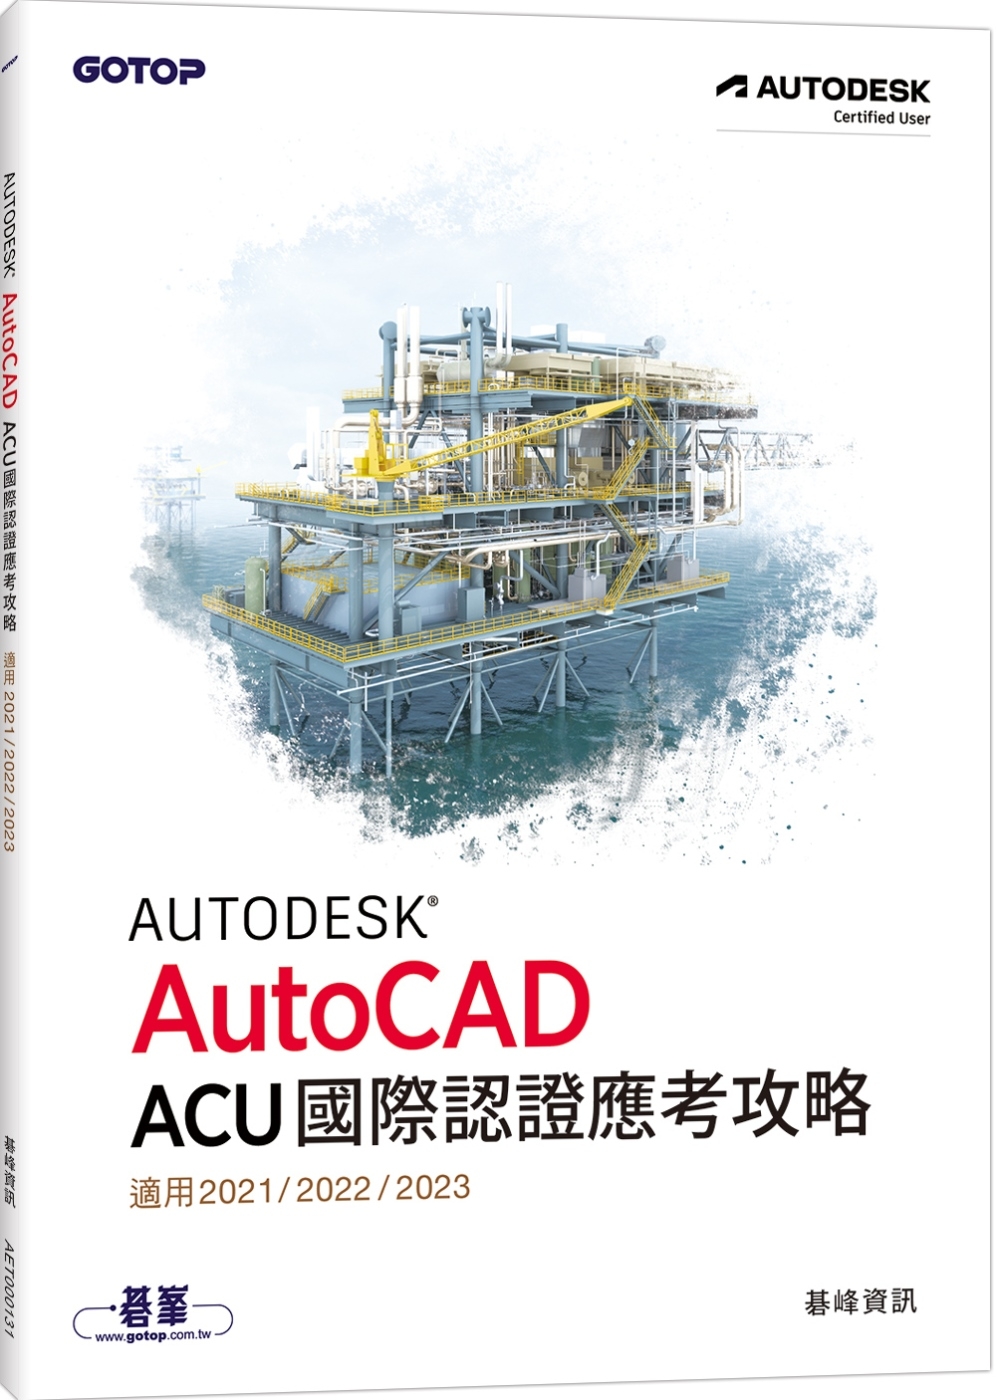 Autodesk AutoCAD ACU 國際認證應考攻略 (適用2021/2022/2023)